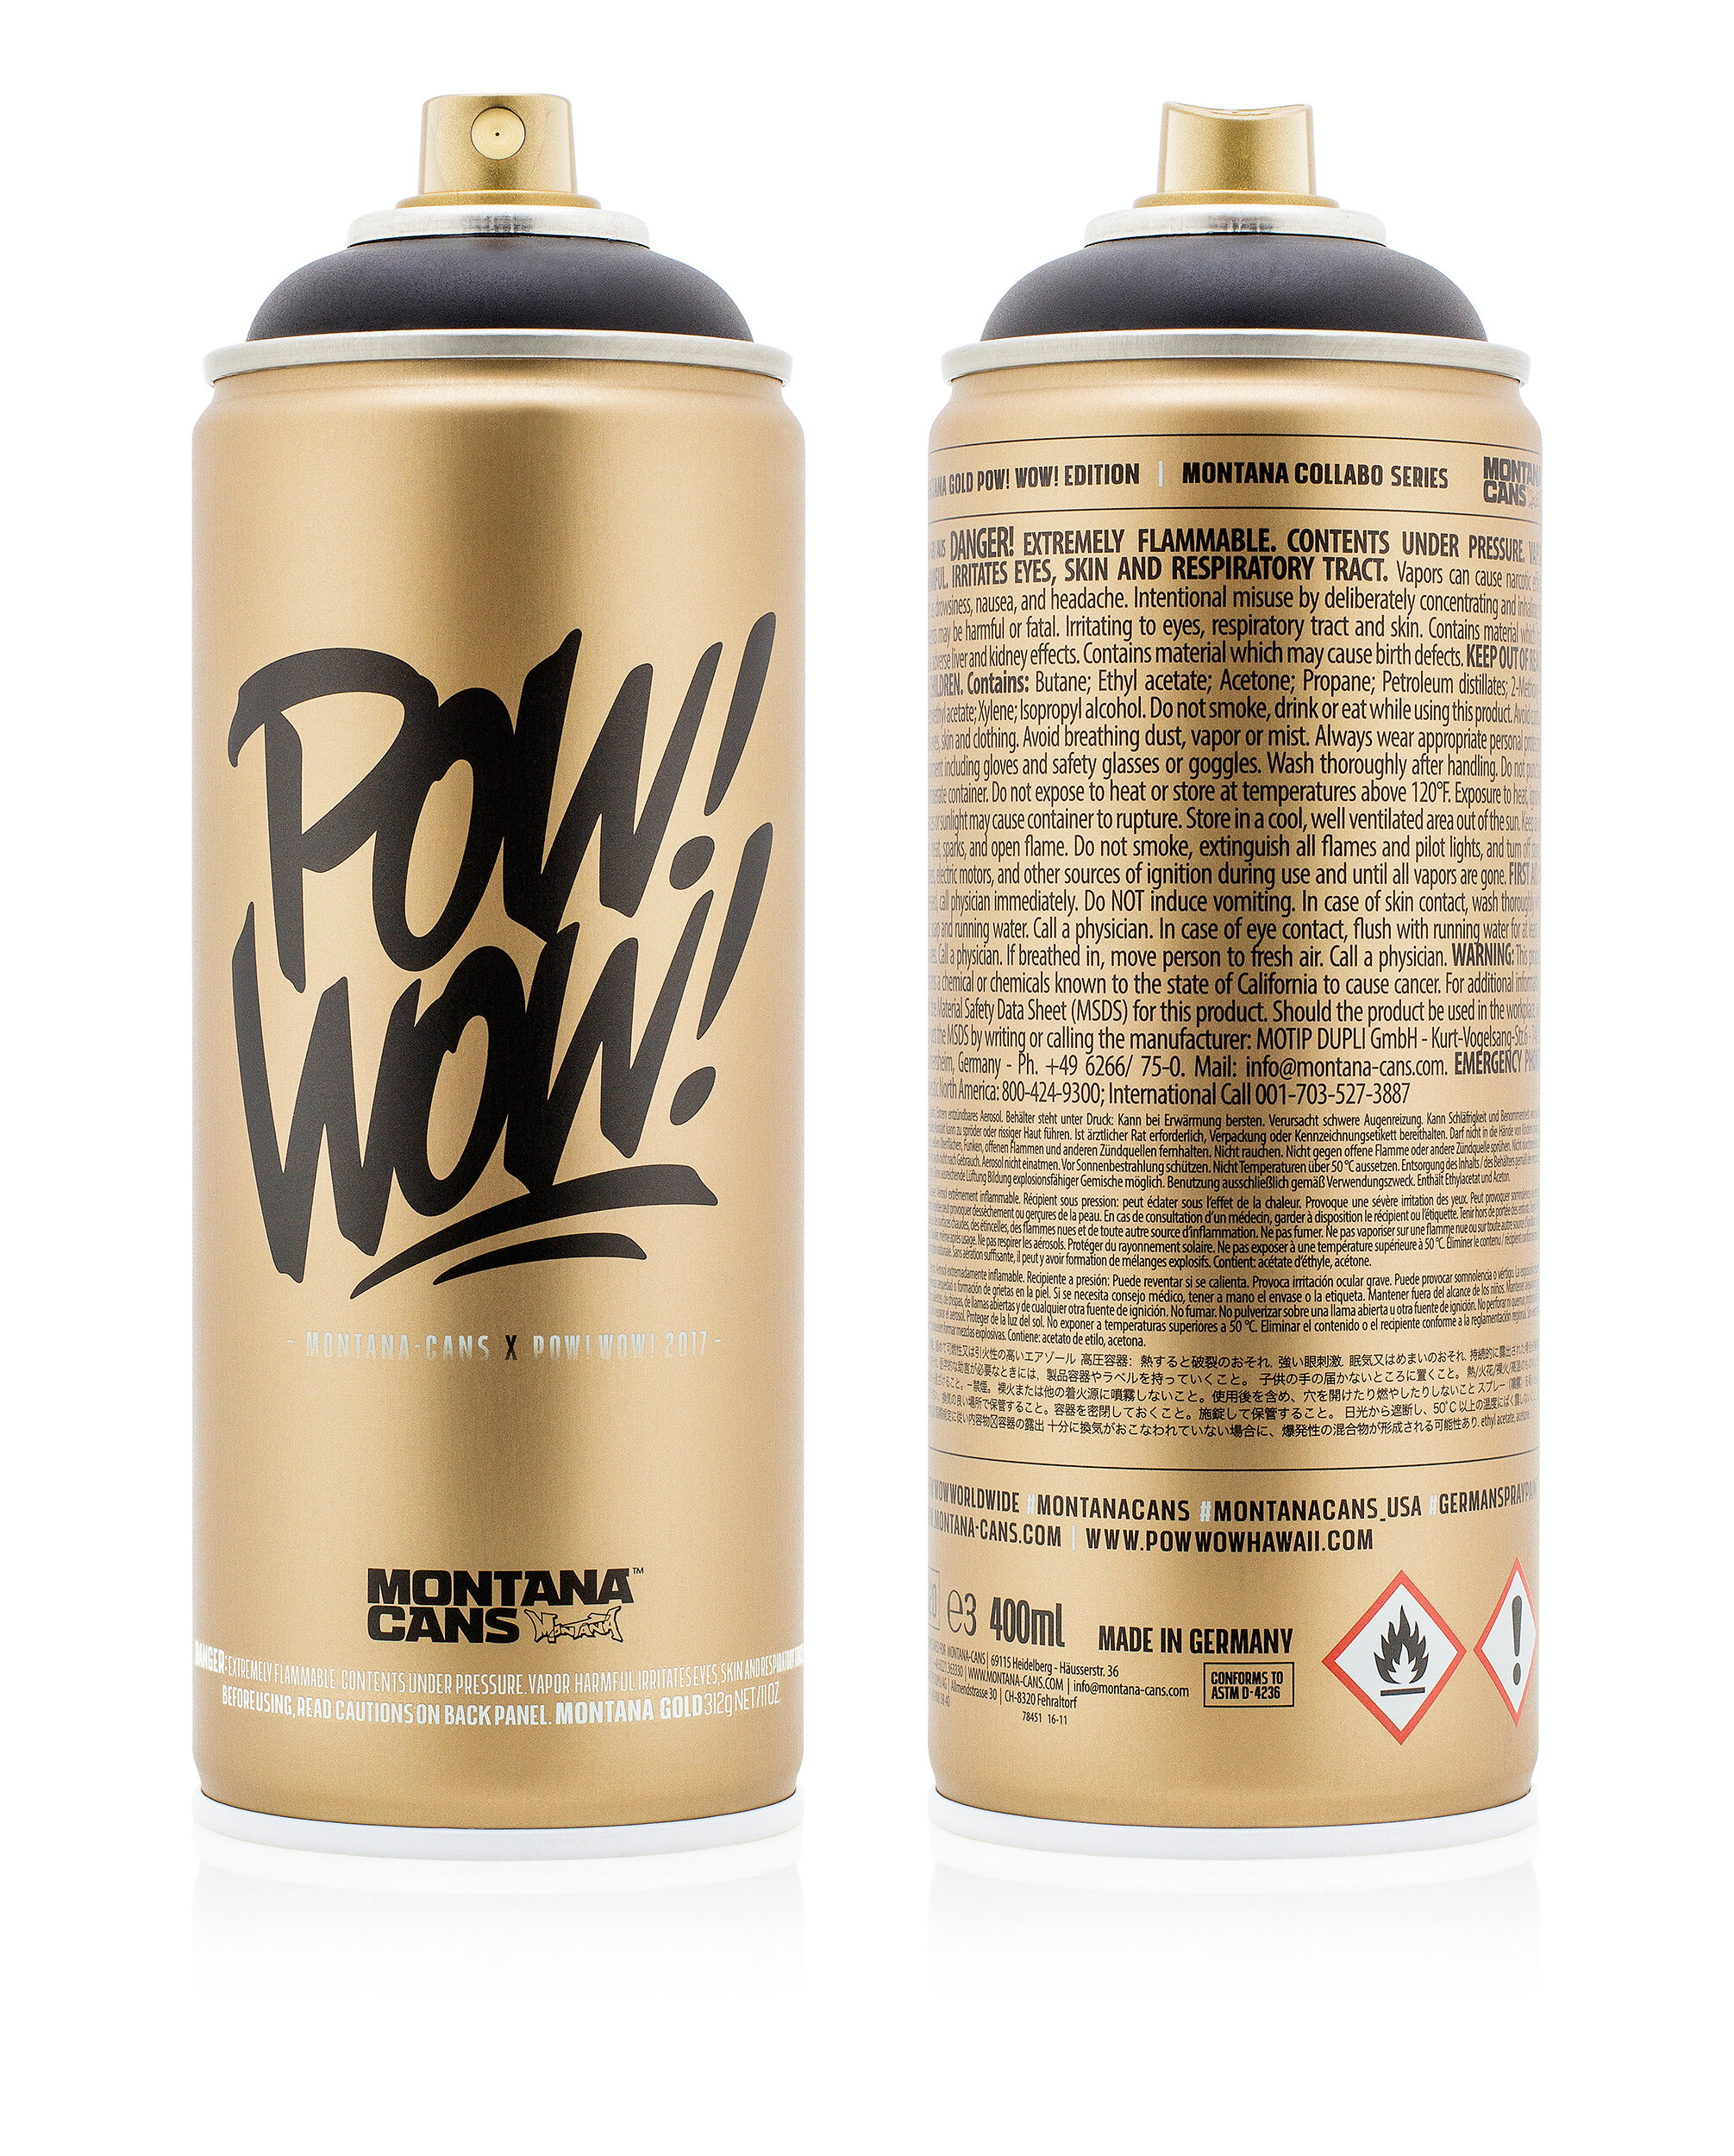 Montana cans. Montana cans Limited Edition. Montana 1 издание. Montana напиток.